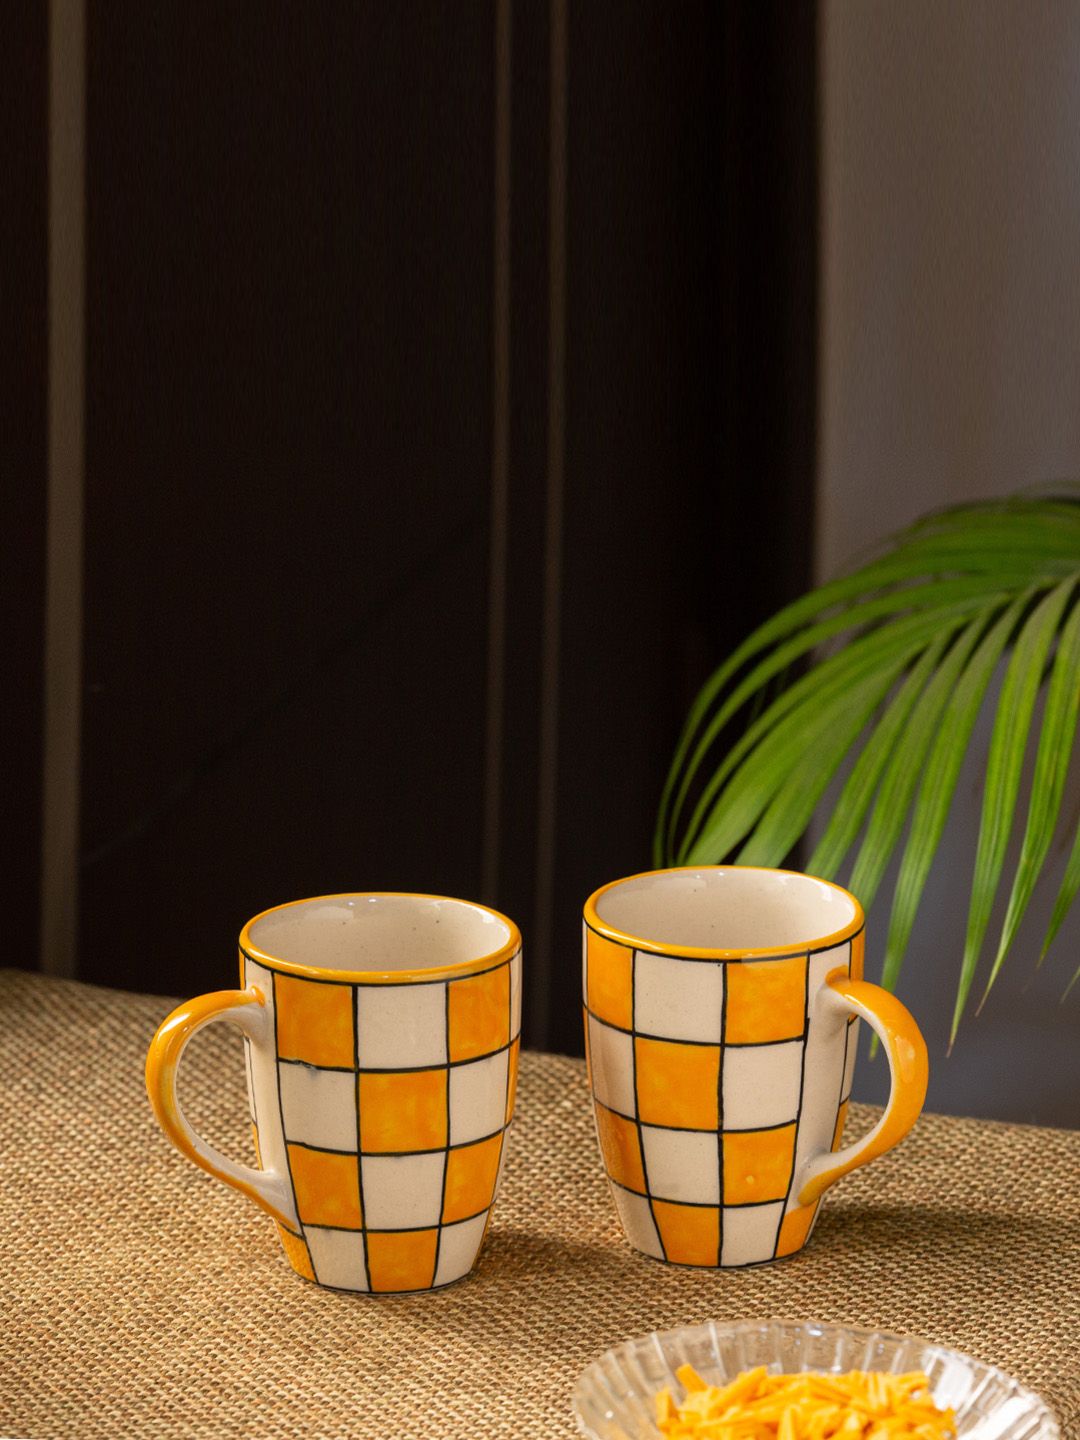 ExclusiveLane Set of 2 Yellow & White Checked Handpainted Ceramic Coffee & Tea Mugs Price in India